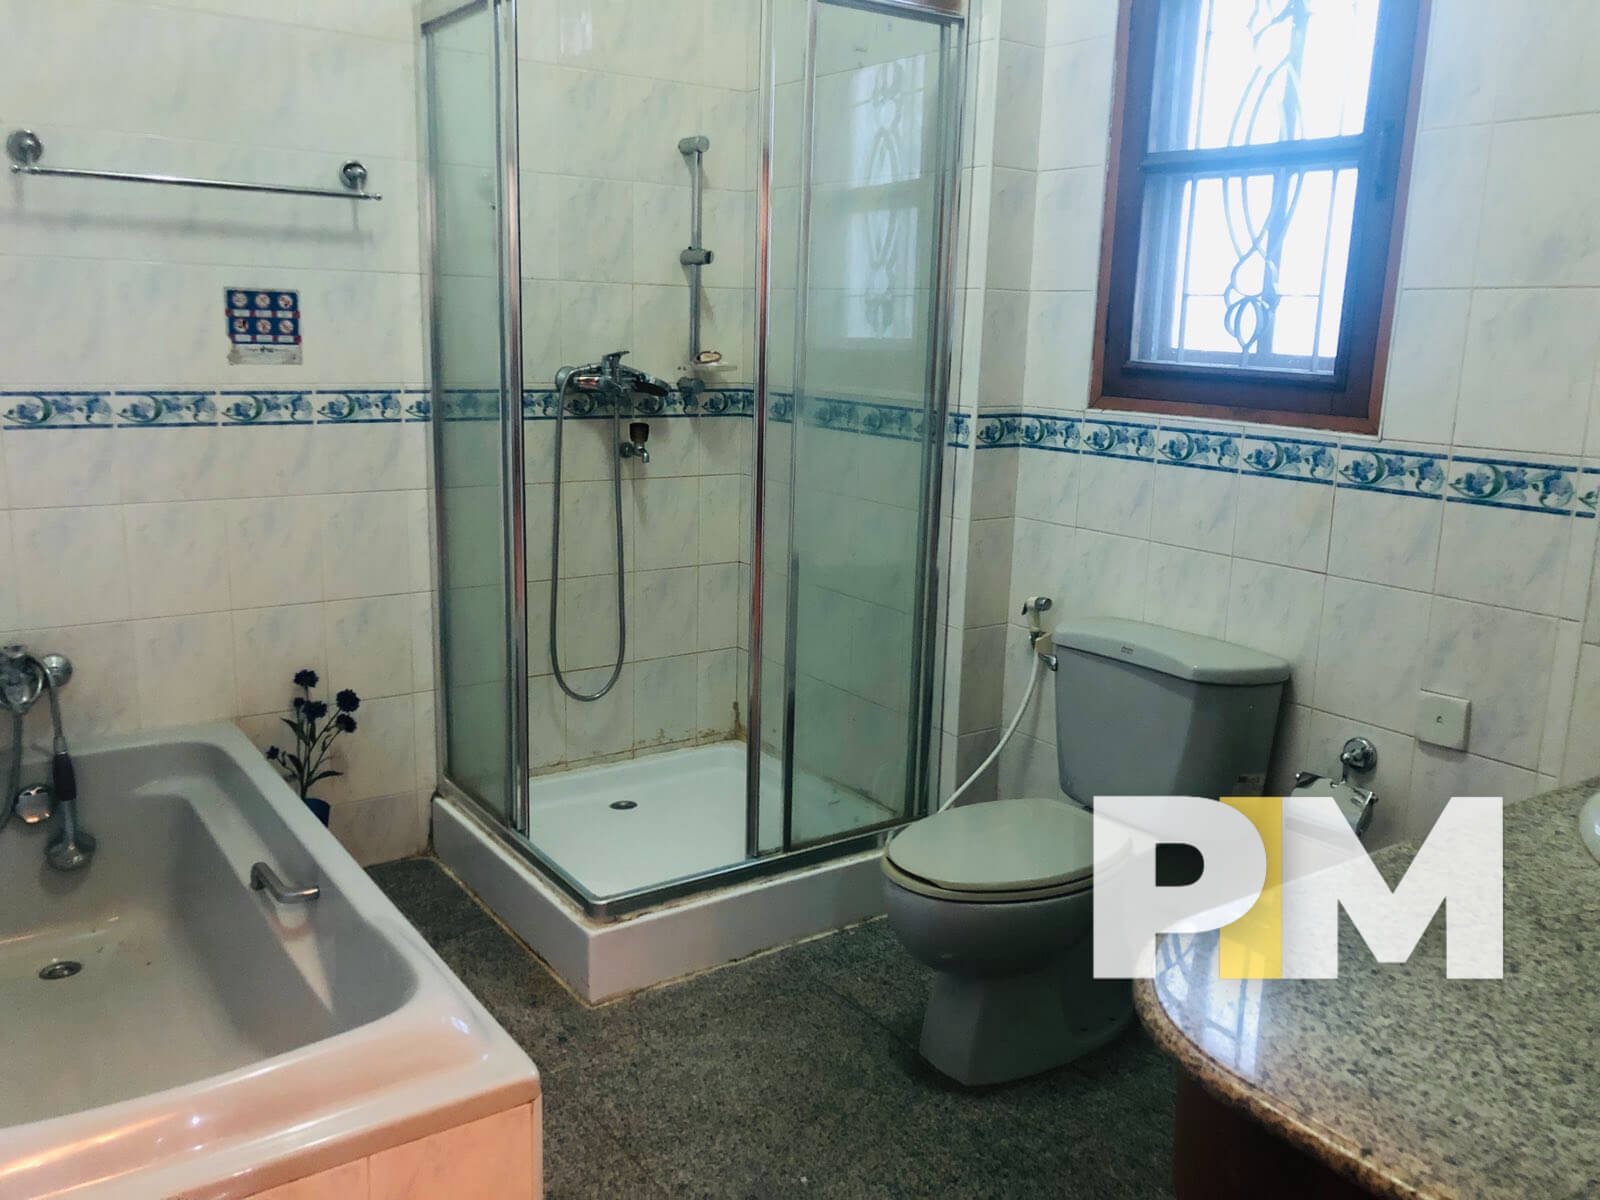 Shower room with sink - Myanmar Real Estate